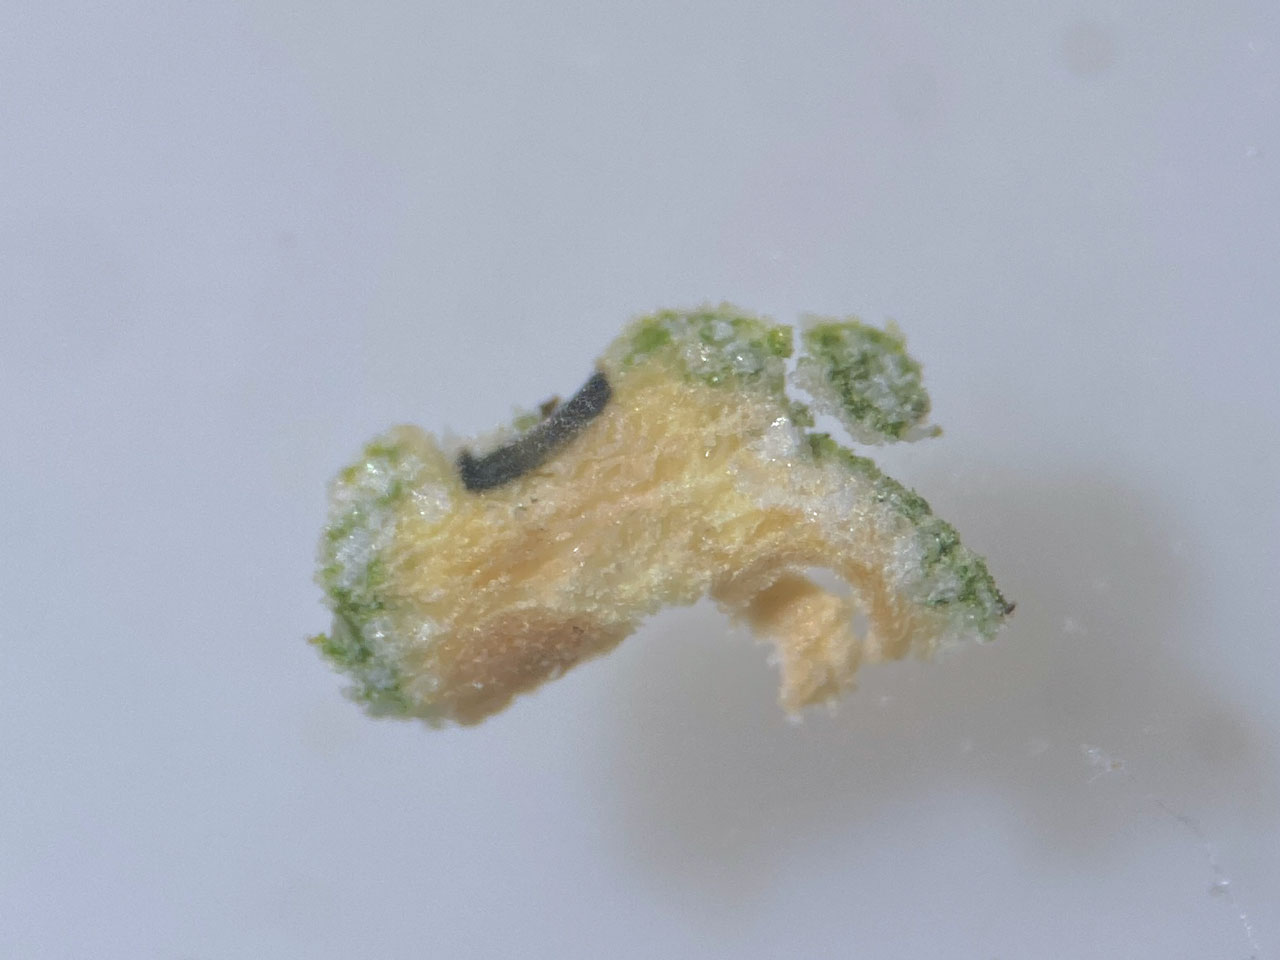 Thelotrema lueckingii, fertile wort cross section, showing fresh citrine yellow medulla, Brook Wood, New Forest